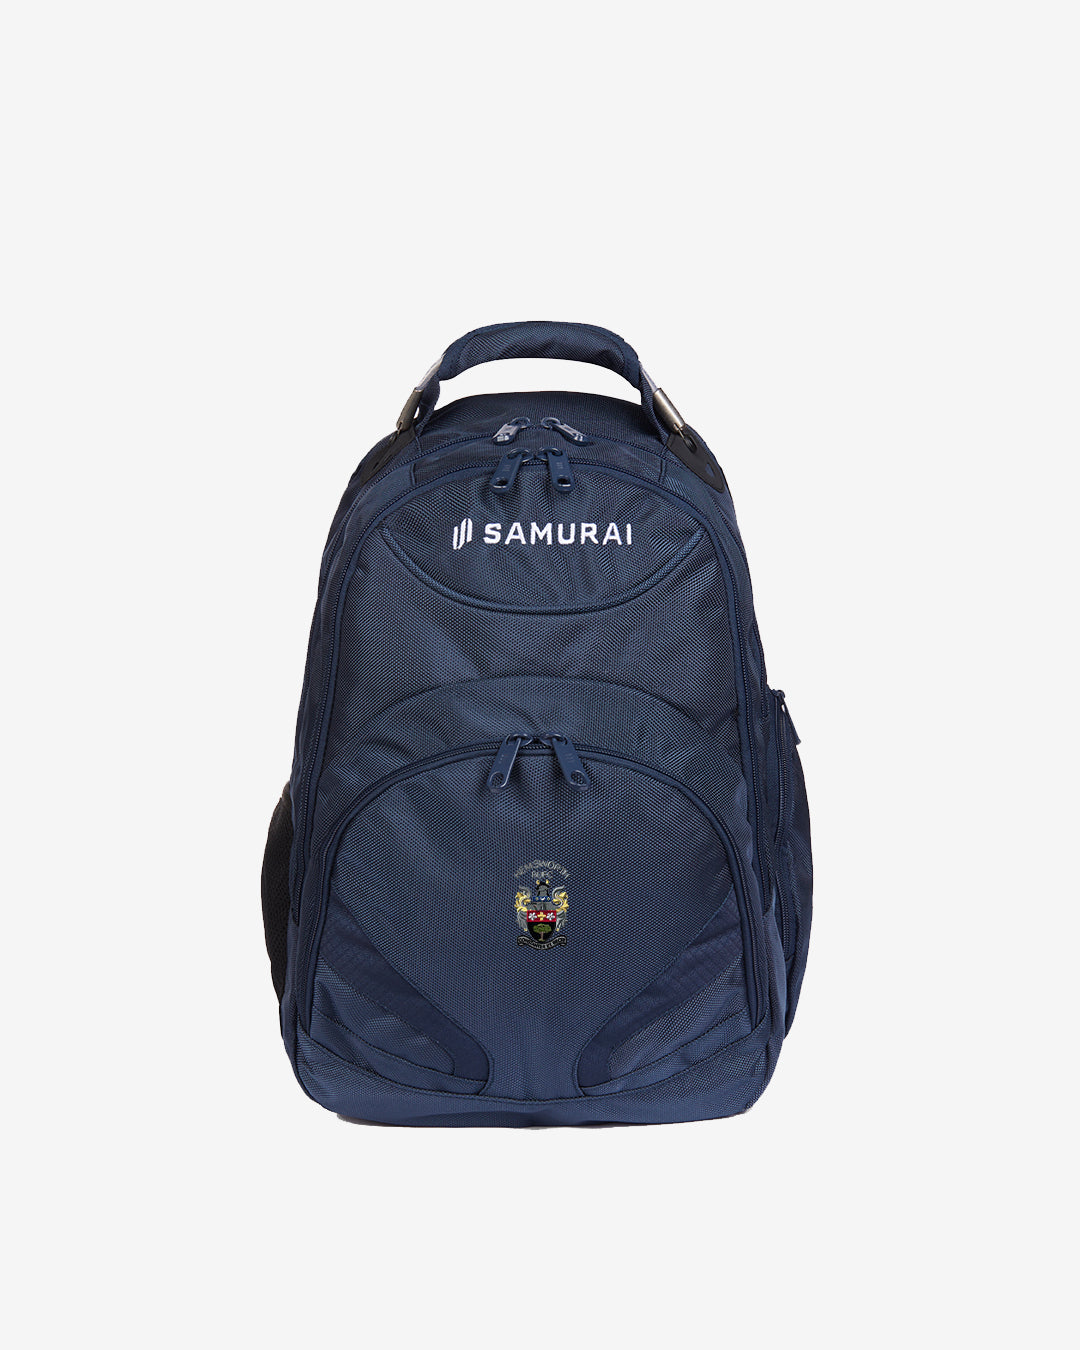 Hemsworth RUFC - U:0213 - Backpack - Navy